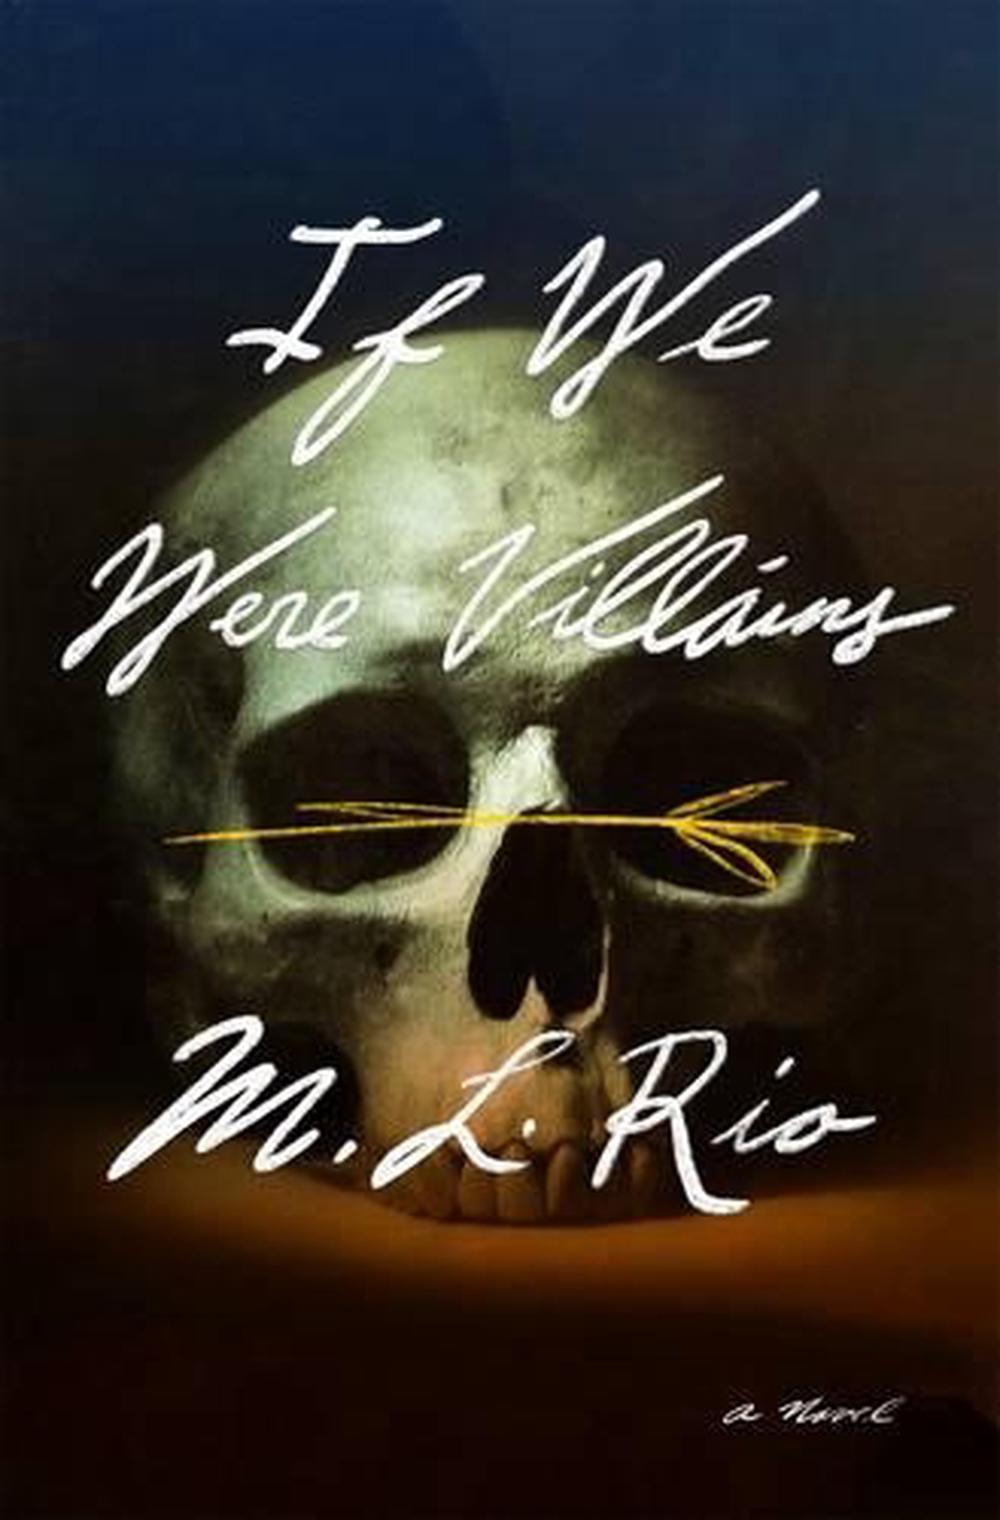 If We Were Villains: A Novel by M. L. Rio